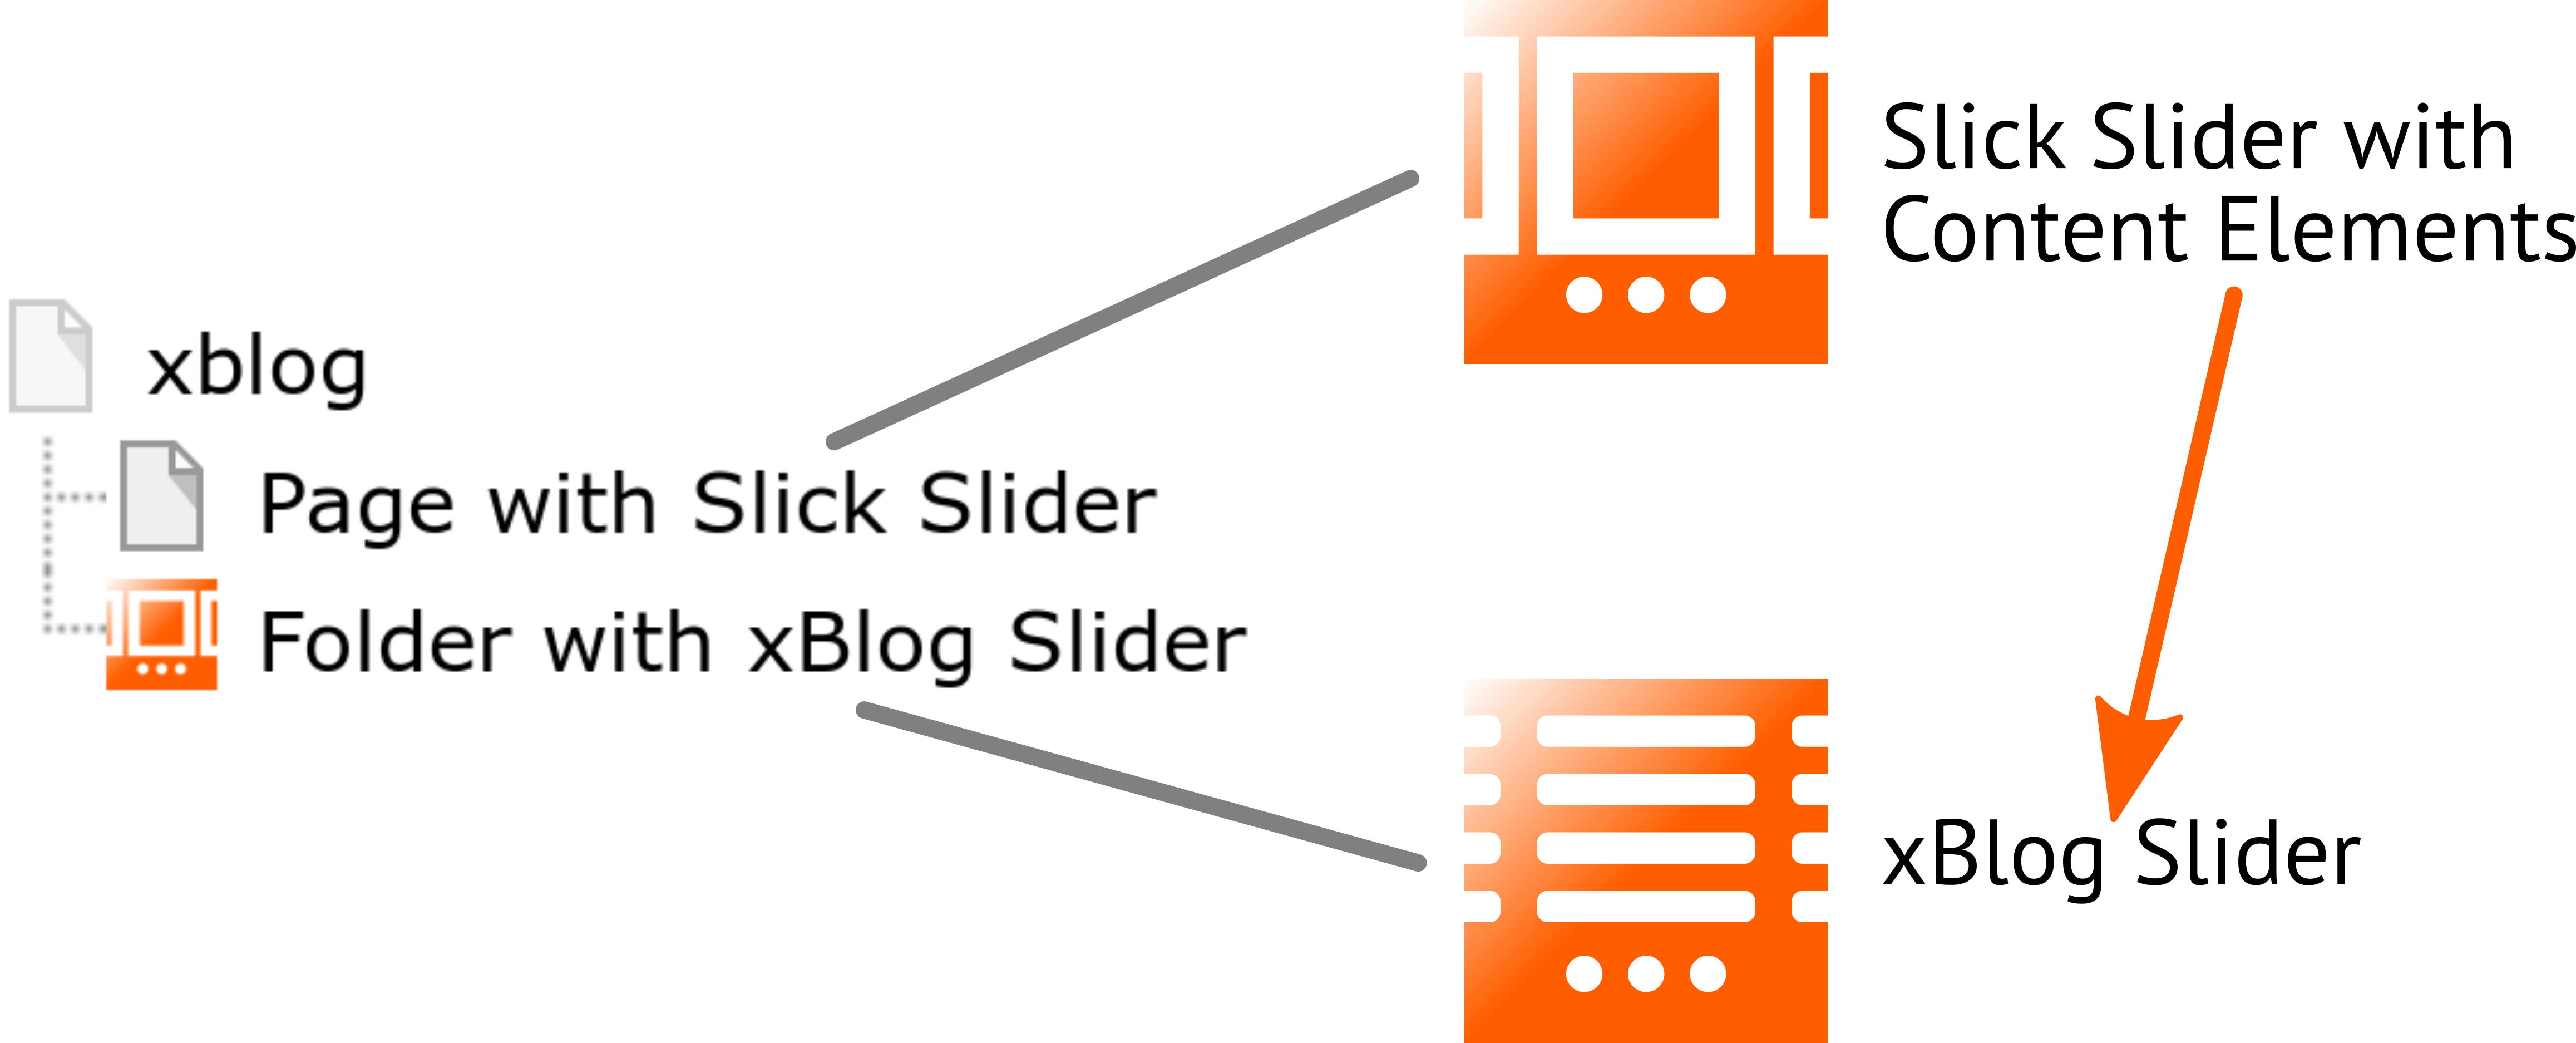 TYPO3 xBlog Slider and the Slick Slider (schematic representation)